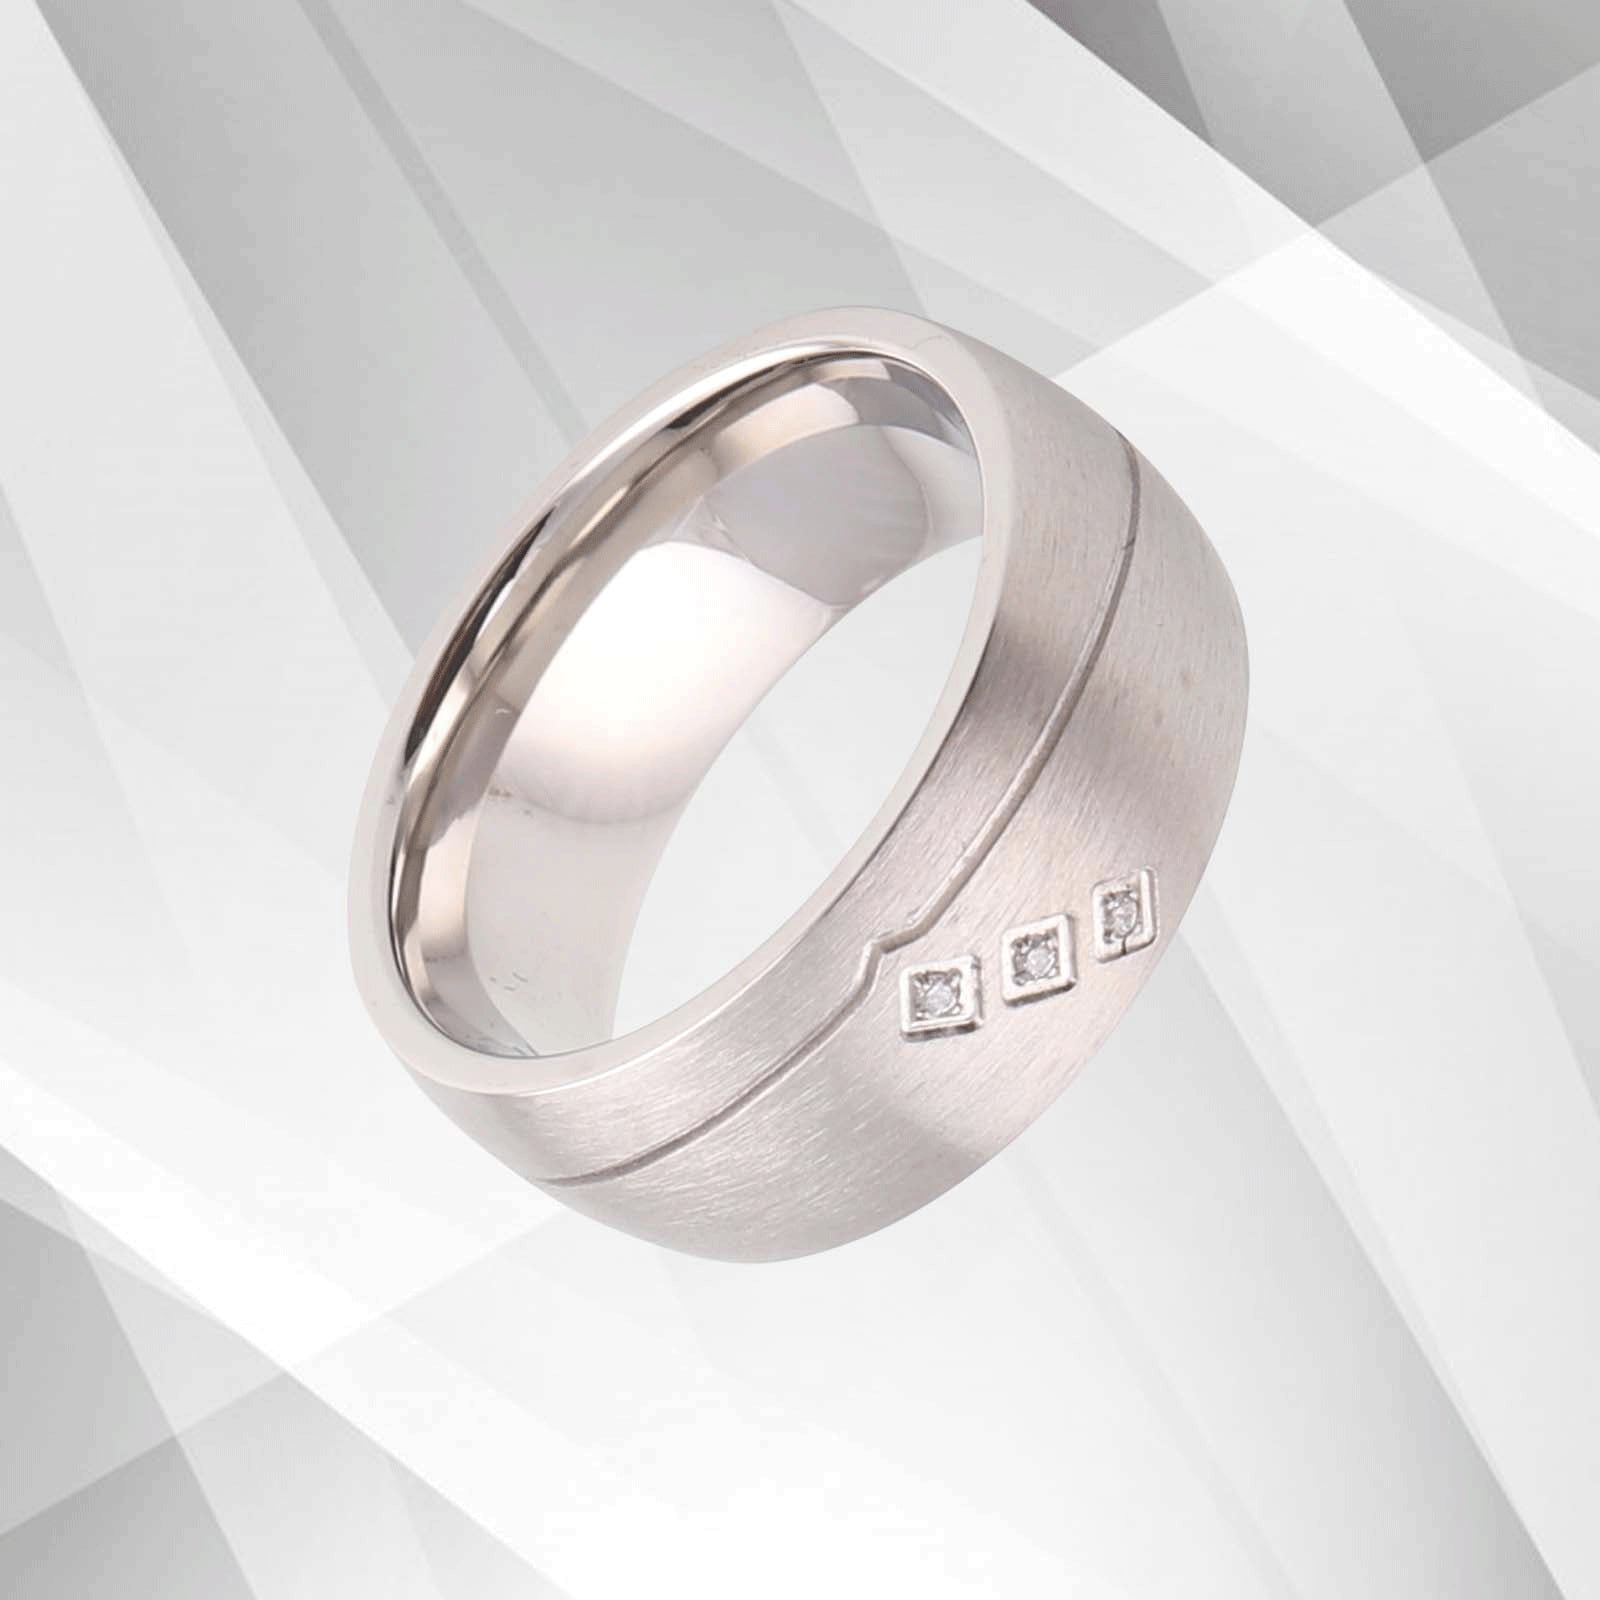 Prestigious 8mm Titanium CZ Diamond Wedding Band Ring - White Gold Finish - Comfort Fit for Women - Jewelry & Watches - Bijou Her -  -  - 